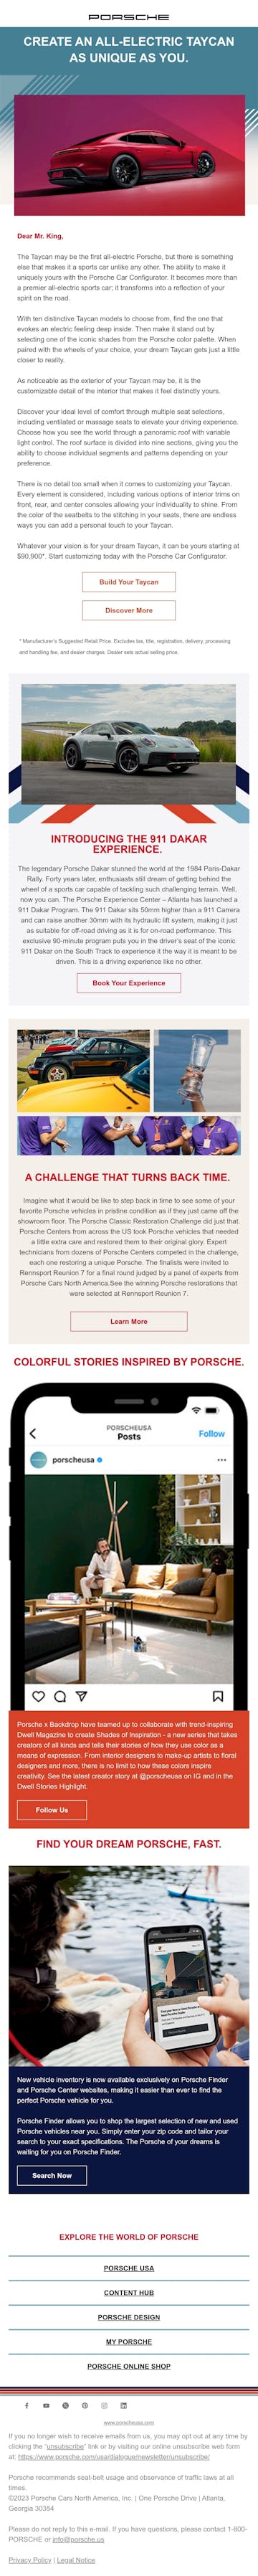 Porsche Email Design Thumbnail Preview